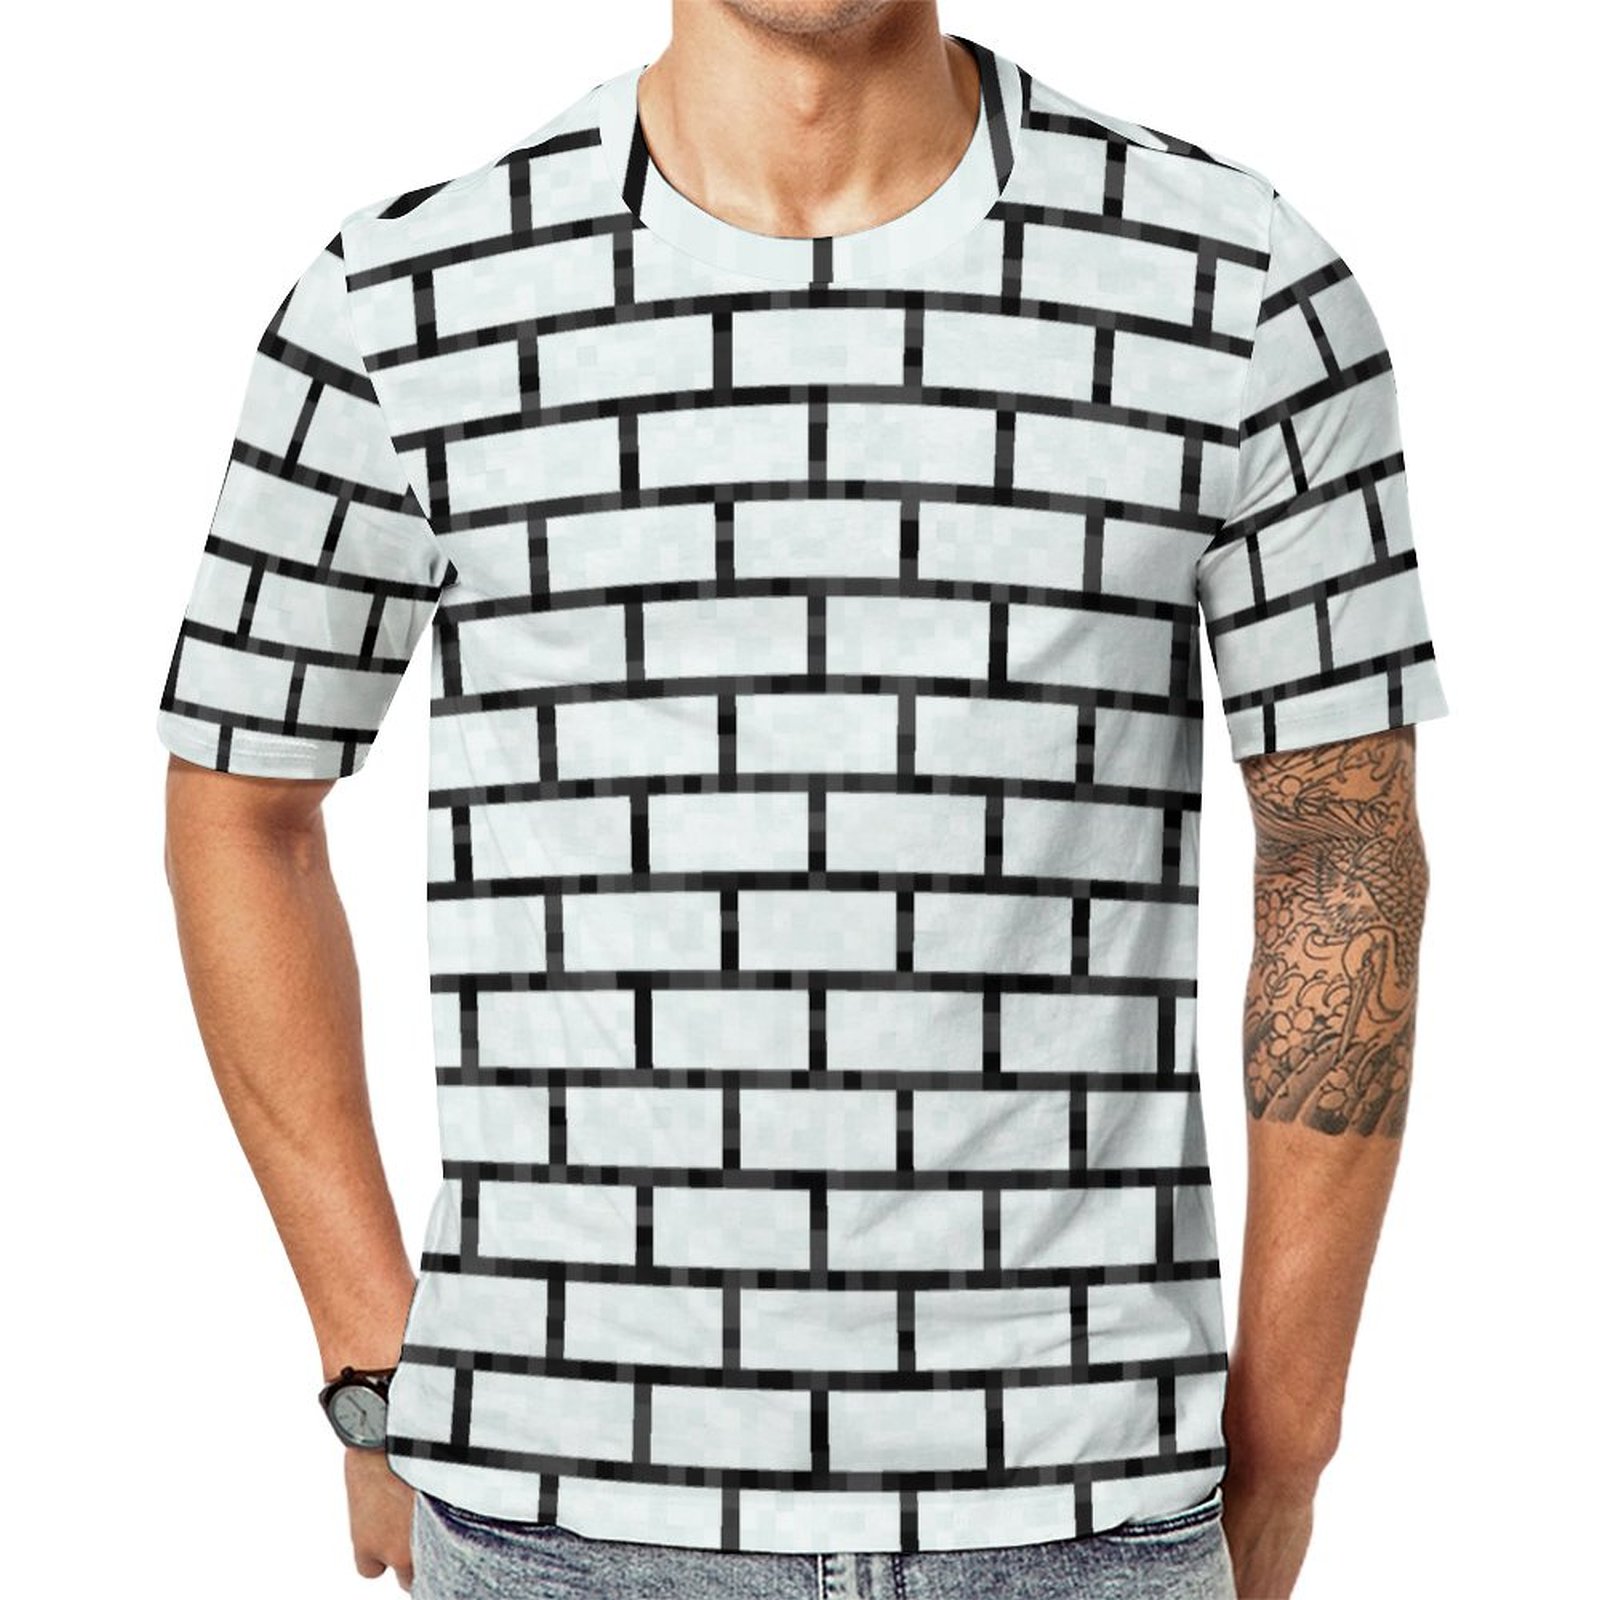 Green 8 Bit Video Game Look Bricks Short Sleeve Print Unisex Tshirt Summer Casual Tees for Men and Women Coolcoshirts